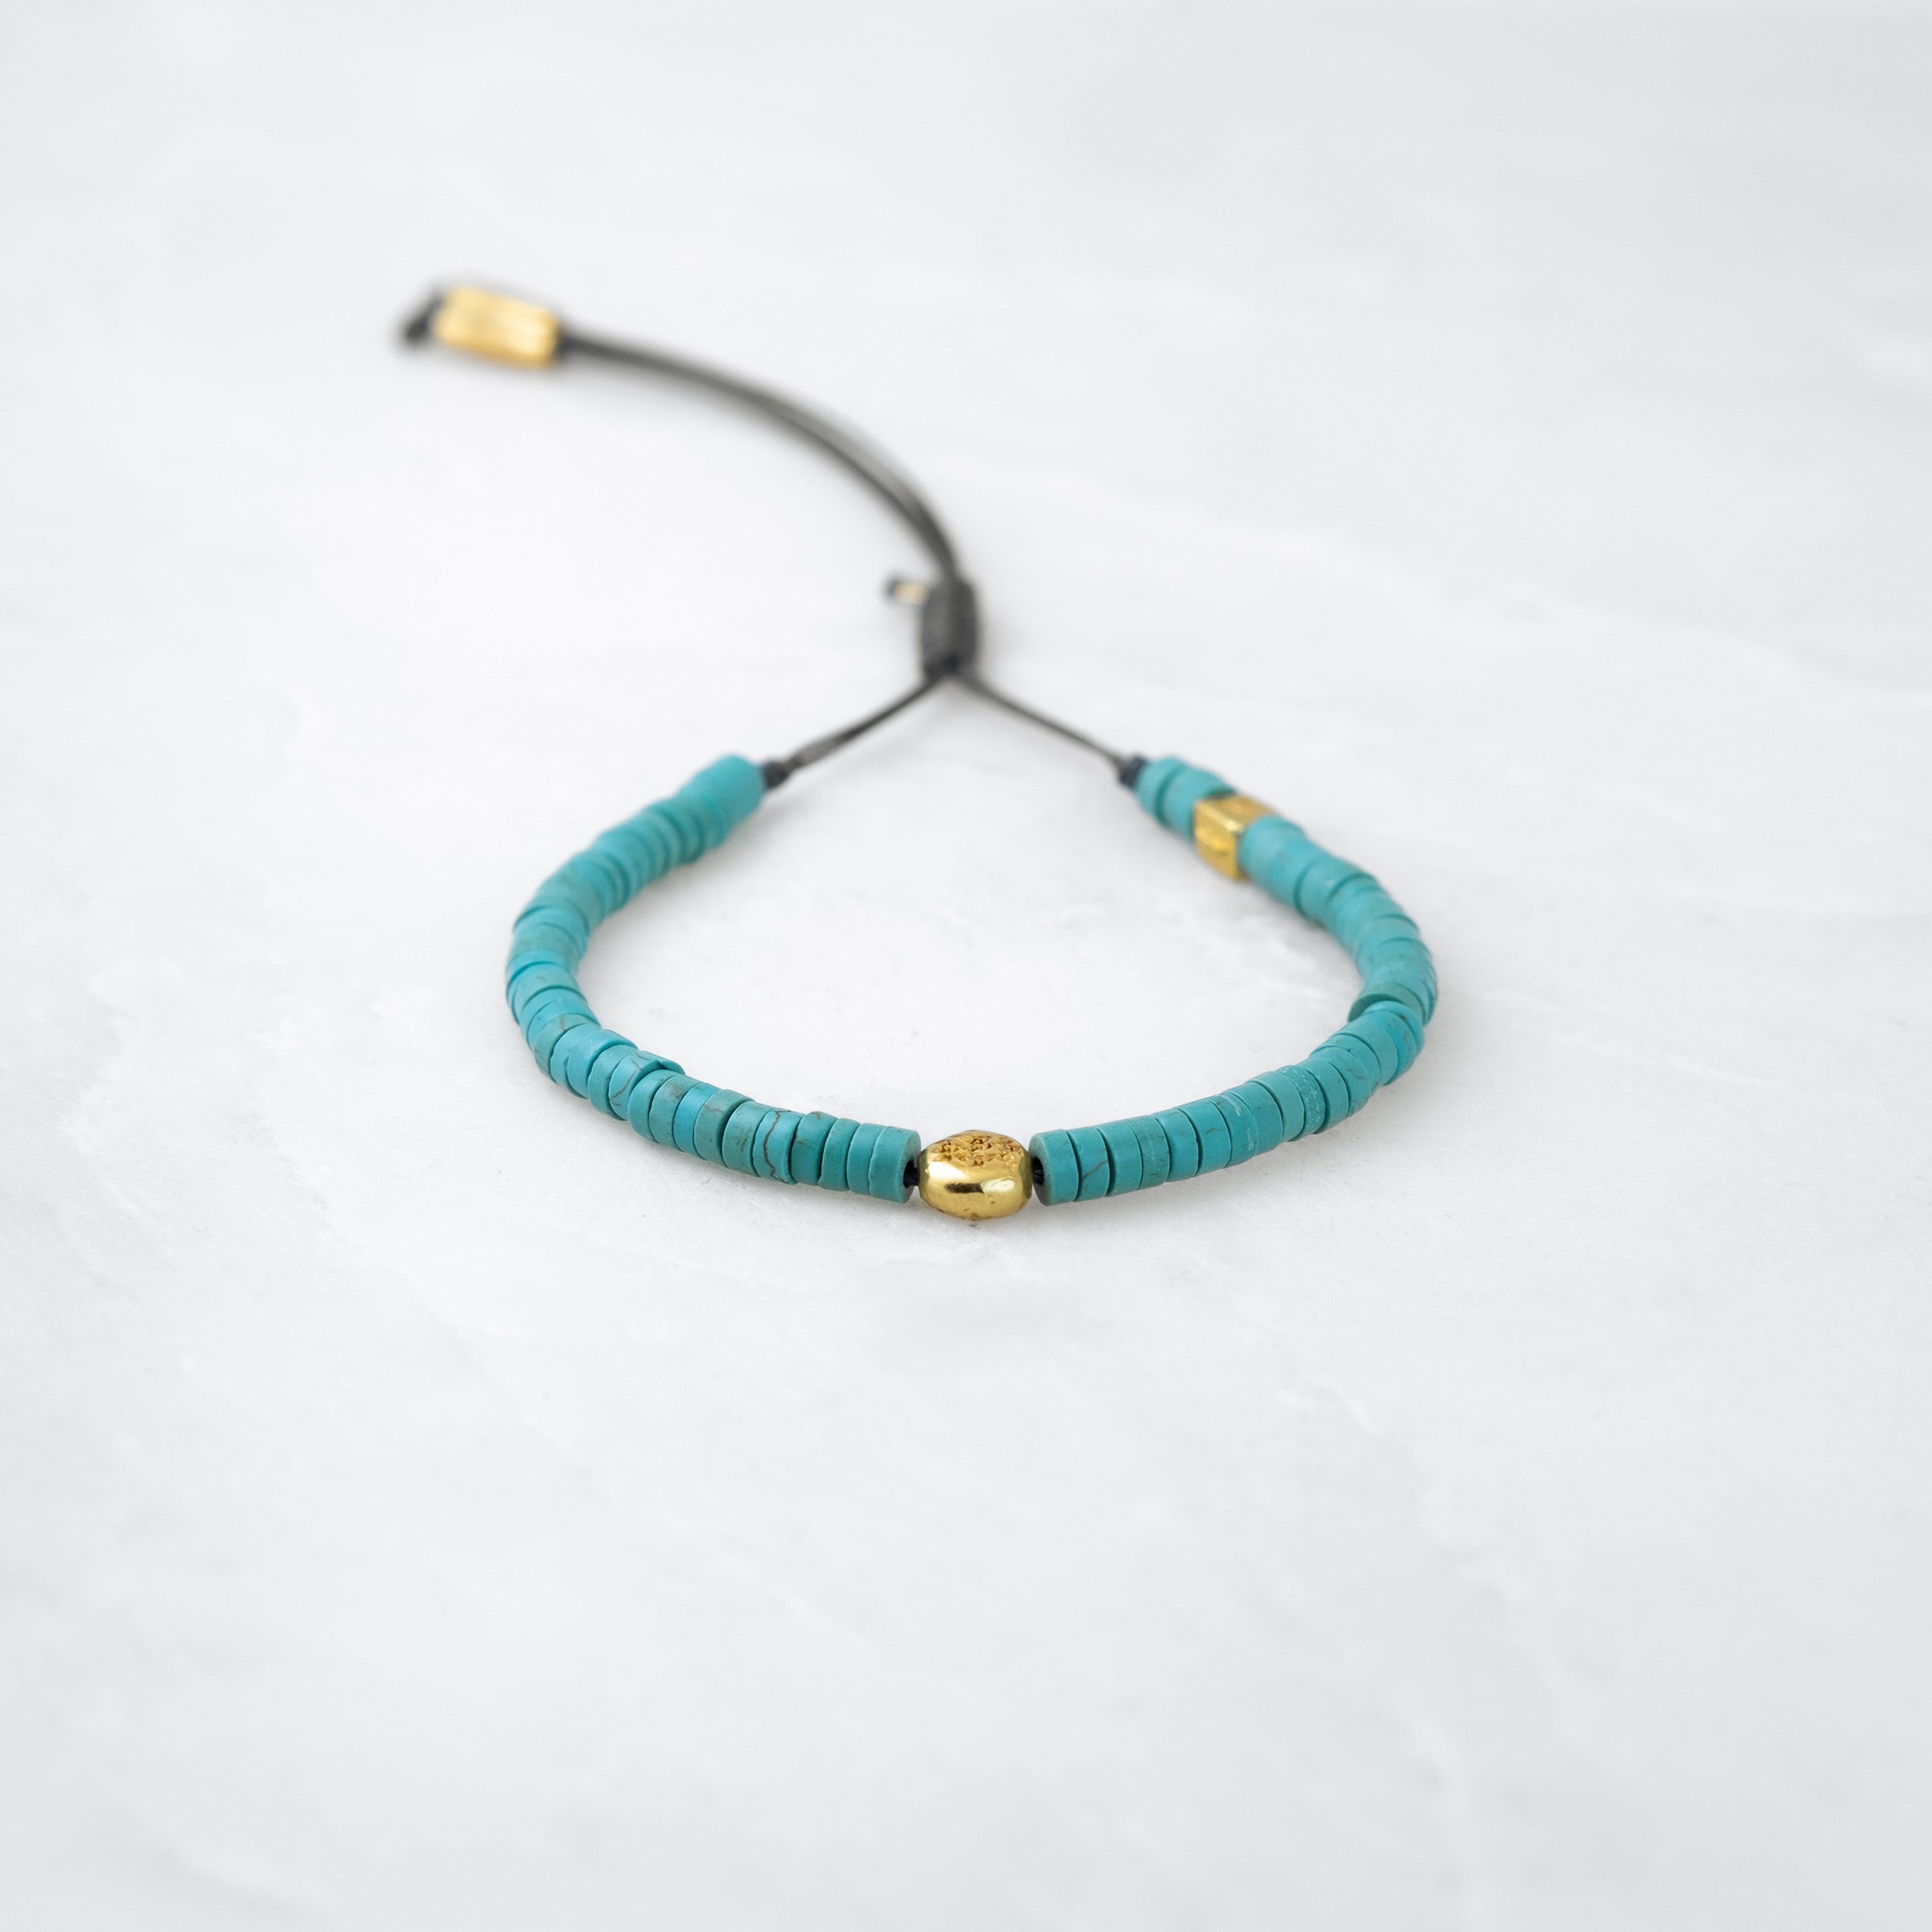 TIBET COLOR bracelet - Turquoise, golden Mani